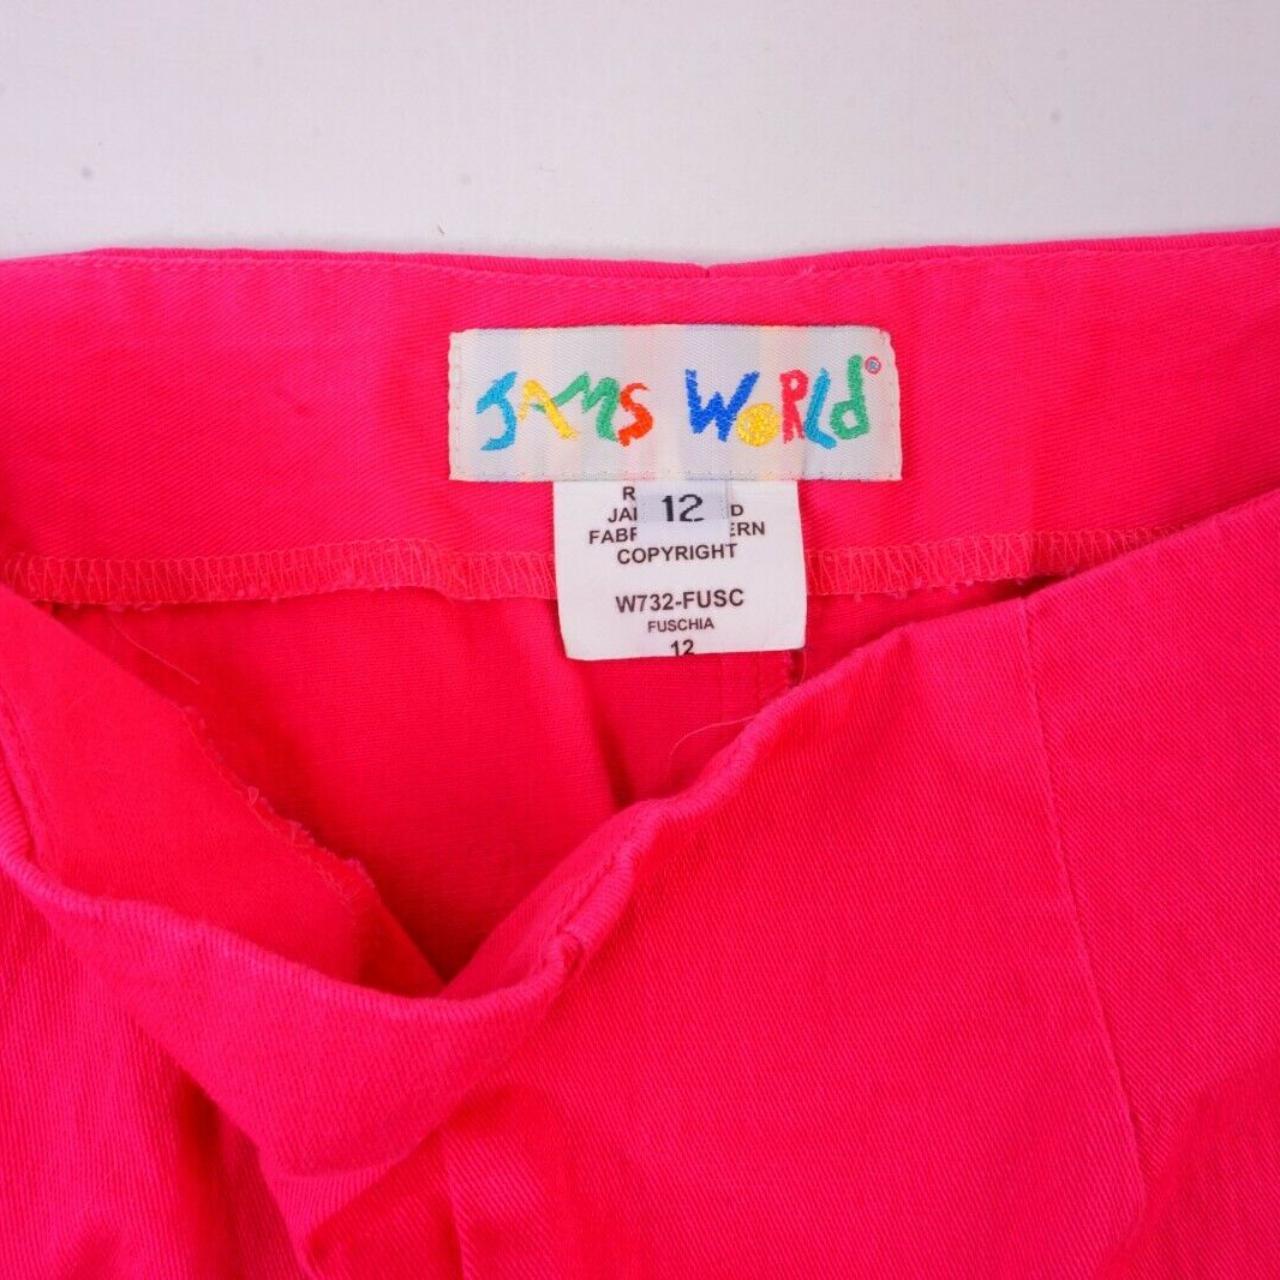 Jams World Women's Pink Trousers (2)